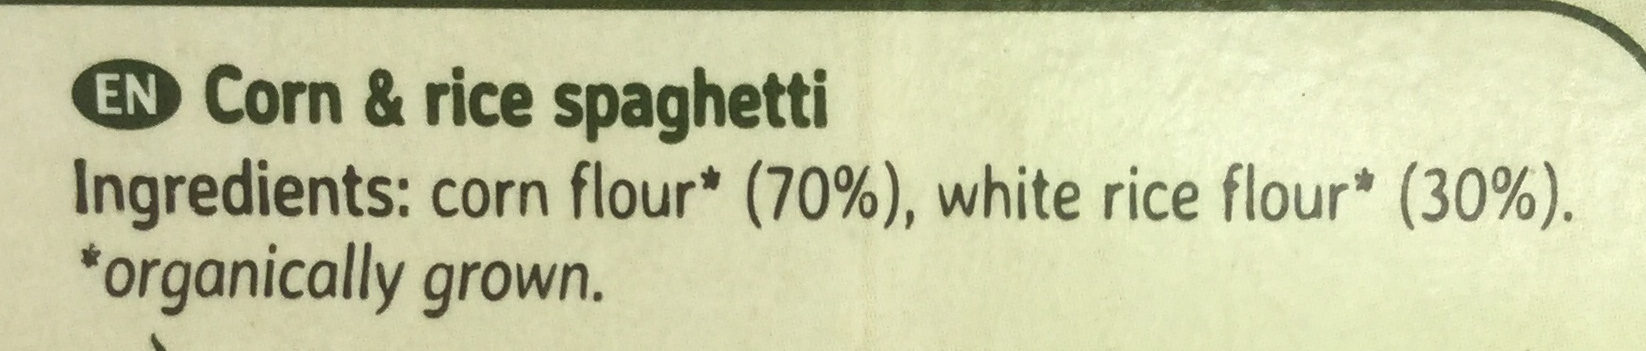 Spaghetti maïs et riz Sans gluten - Ingredients